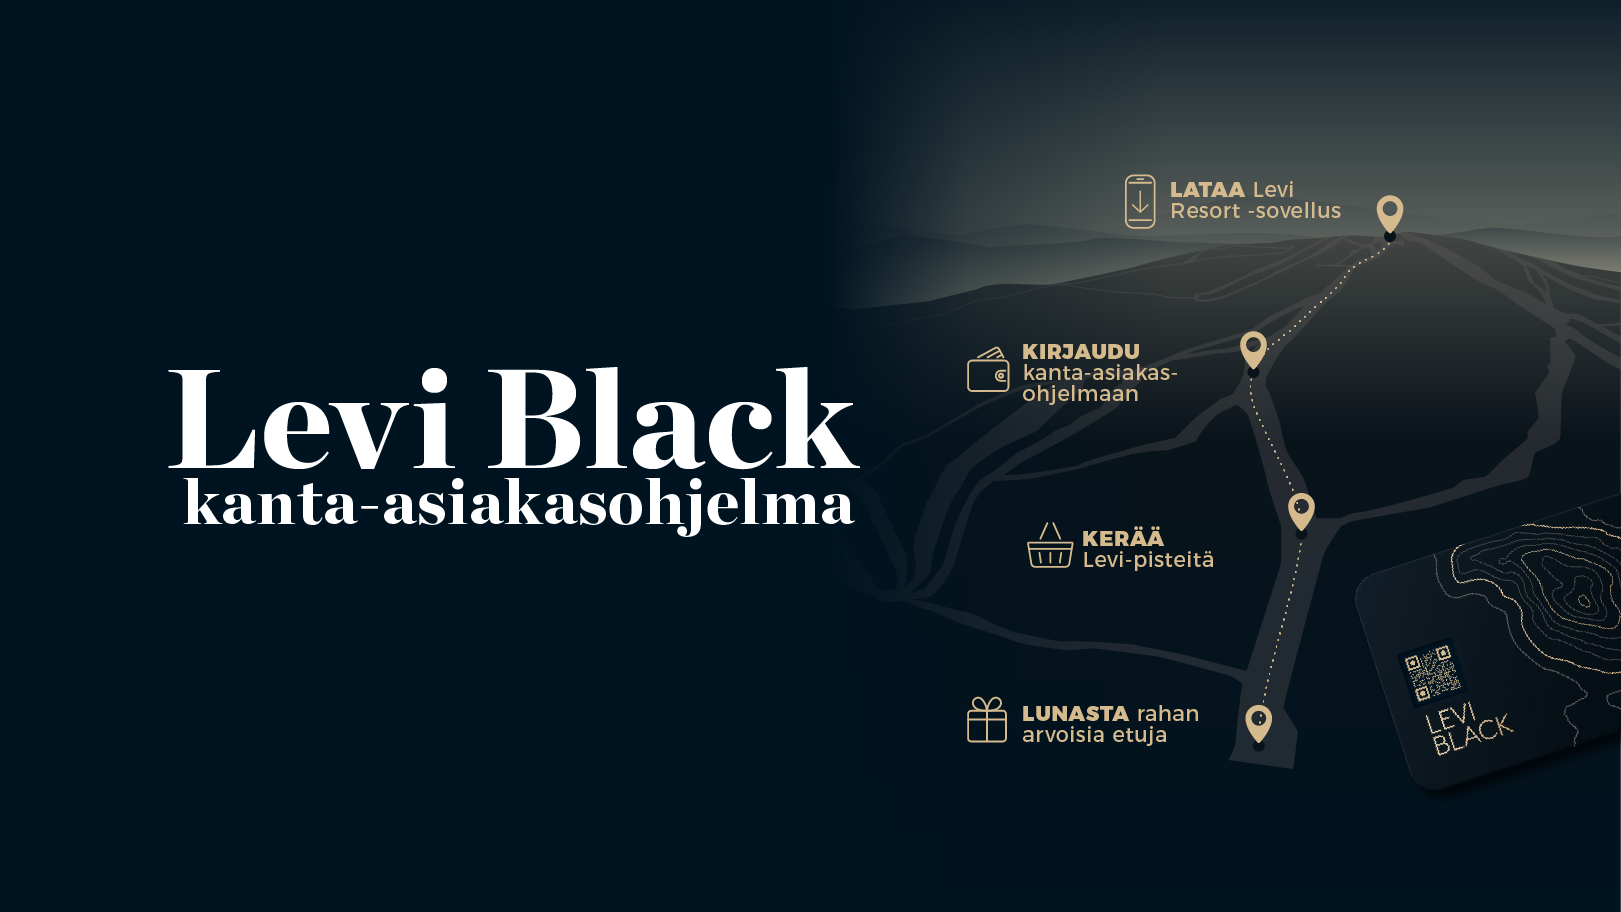 Levi Black Kanta-asiakasohjelma